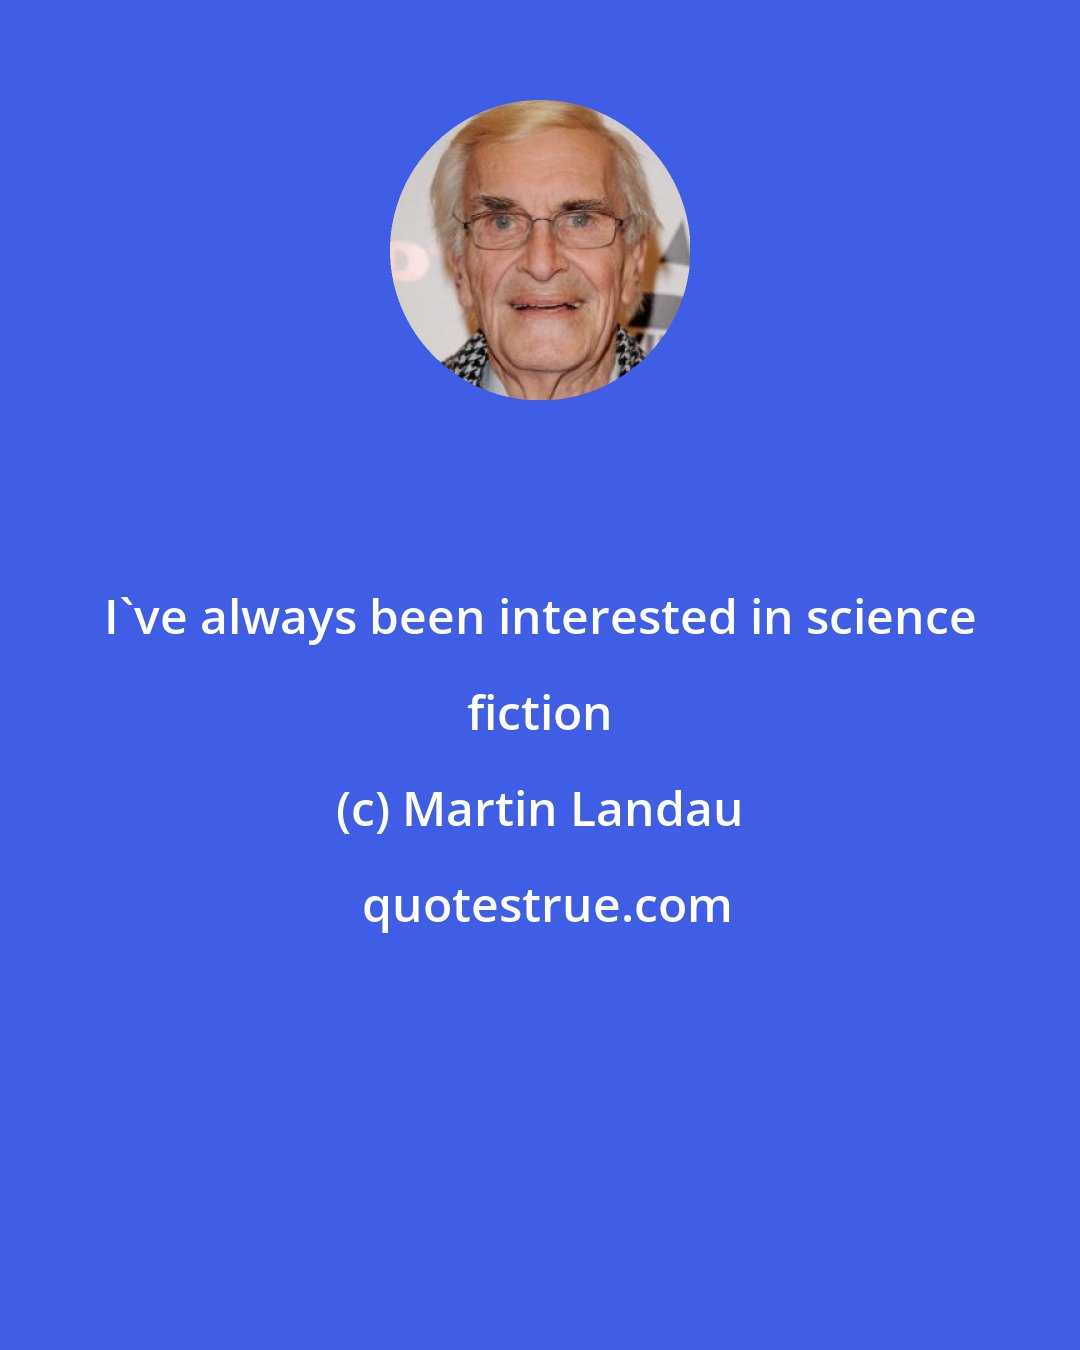 Martin Landau: I've always been interested in science fiction